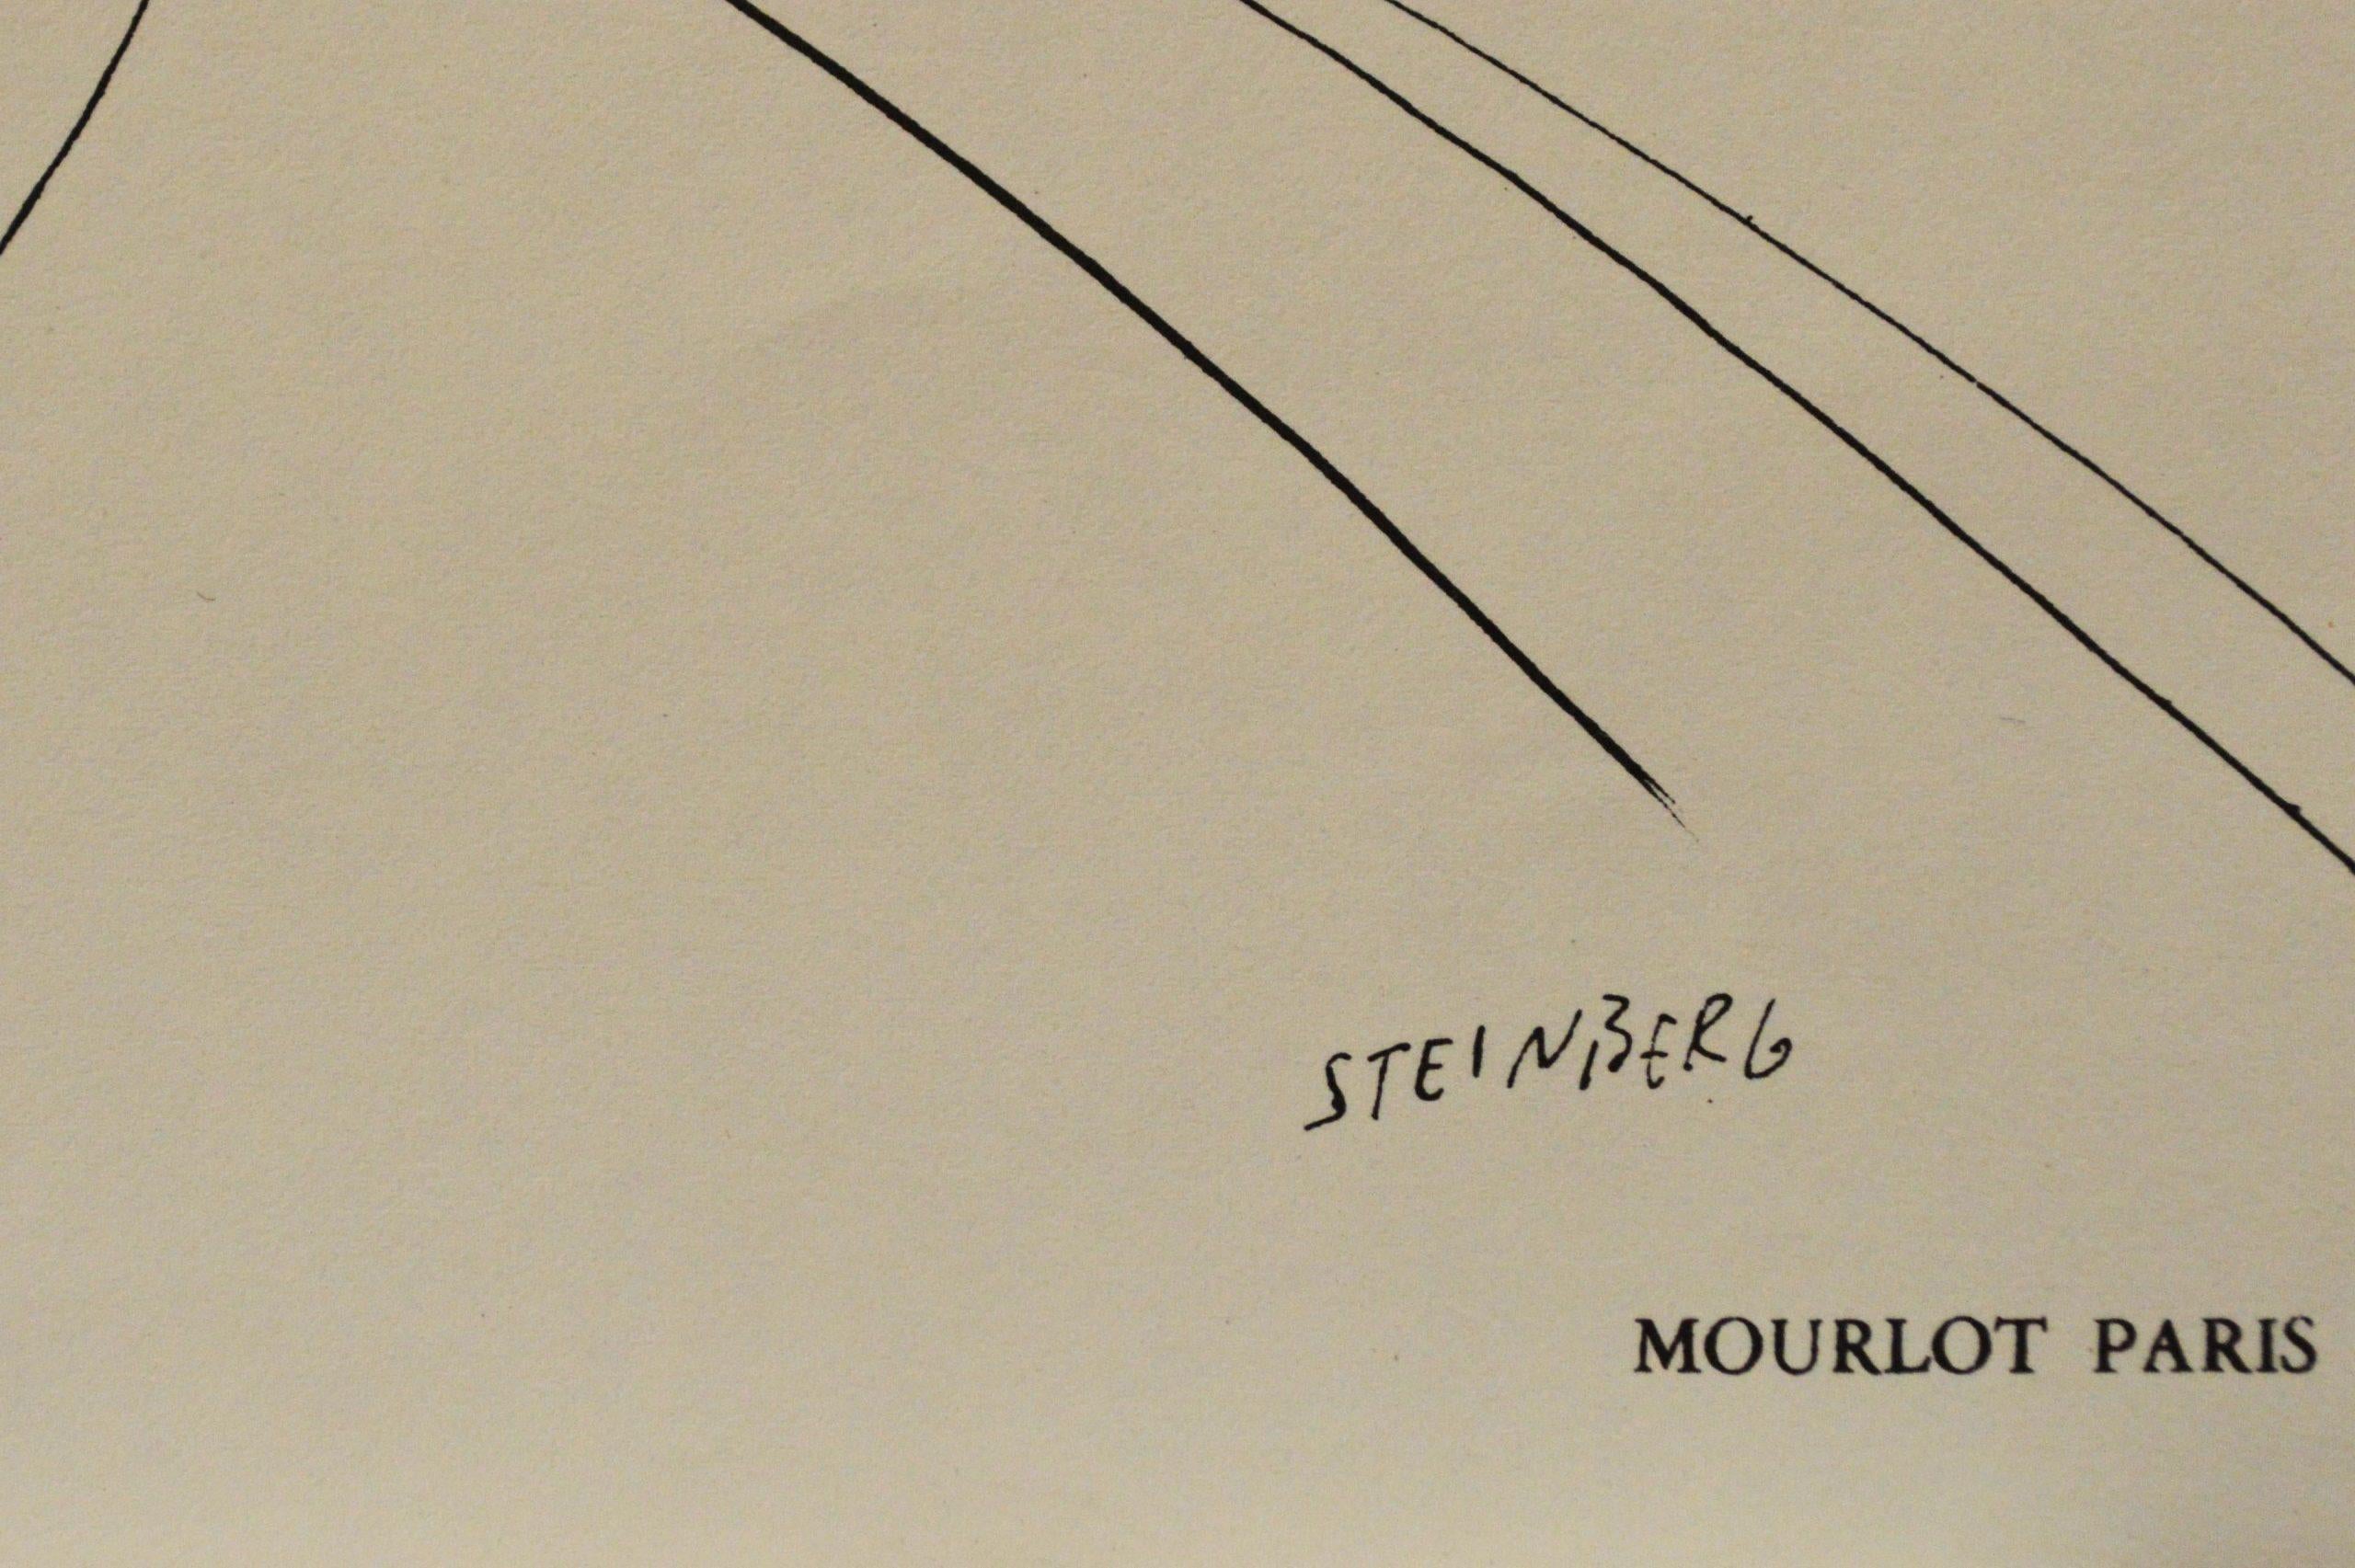 Dessins Récents de Steinberg- Gallerie Maeght. Published by Mourlot, Paris. - Print by Saul Steinberg